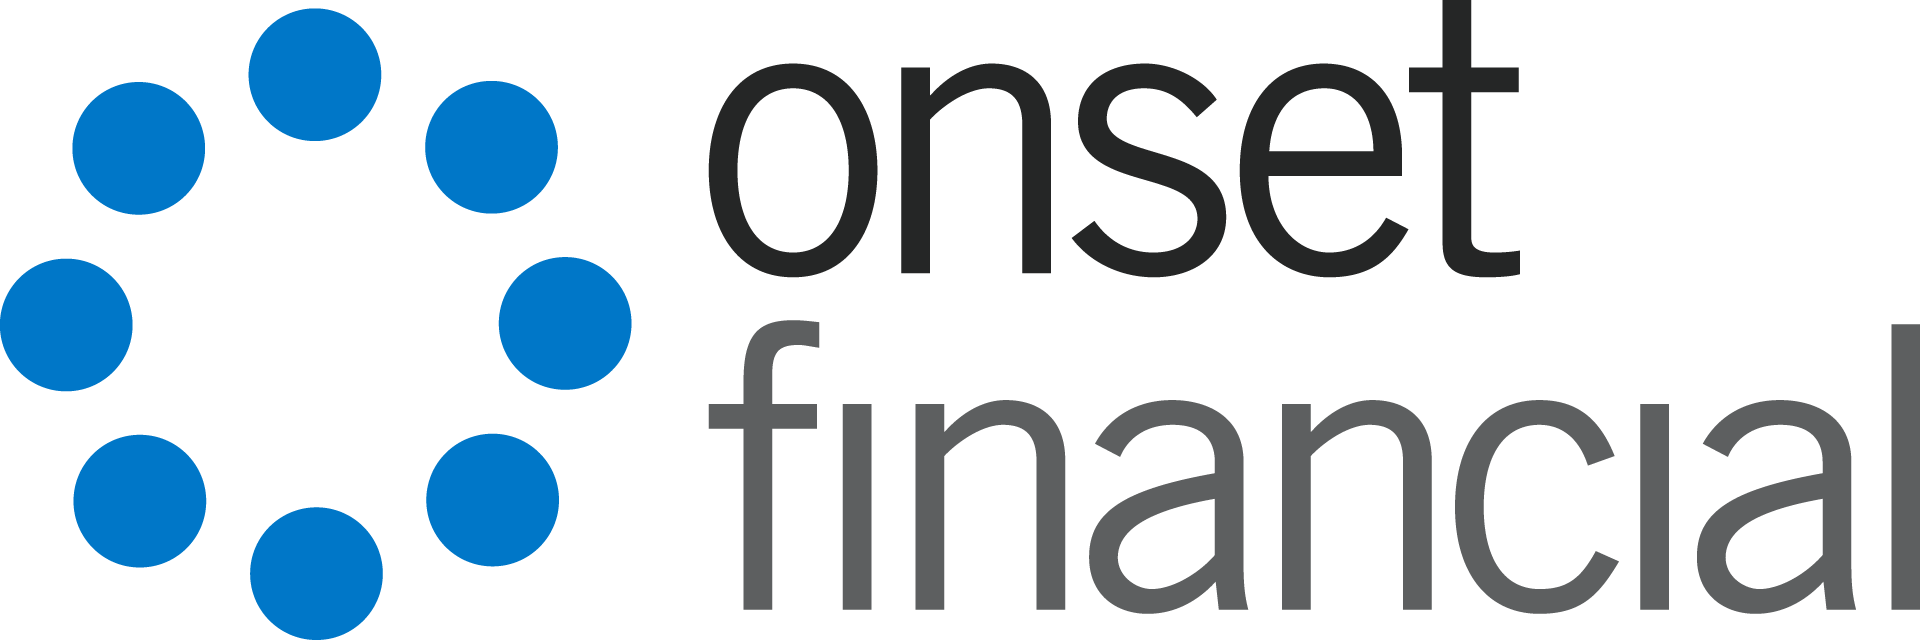 Onset Financial, Inc. Company Logo